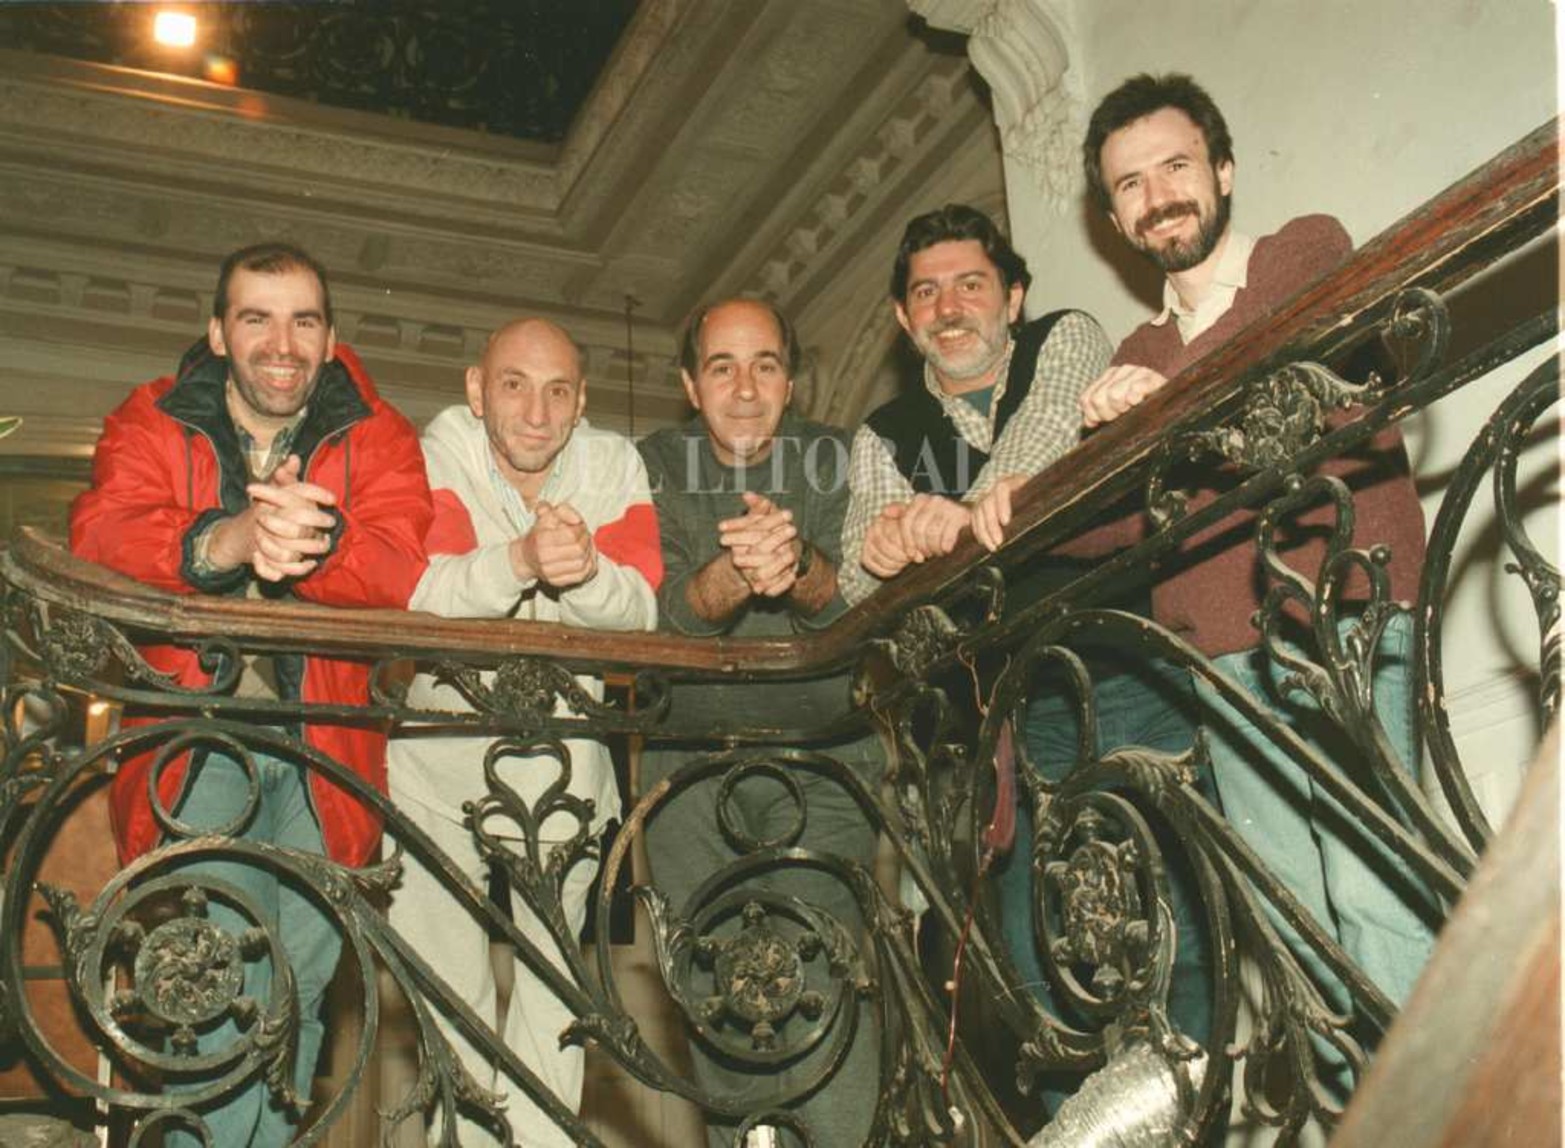 Marzo de 1998. Ensayo del grupo de teatro Llanura. Carlos Mendez, Rafael Bruza, Jorge Ricci, Daniel Machado y Hugo Drueta.